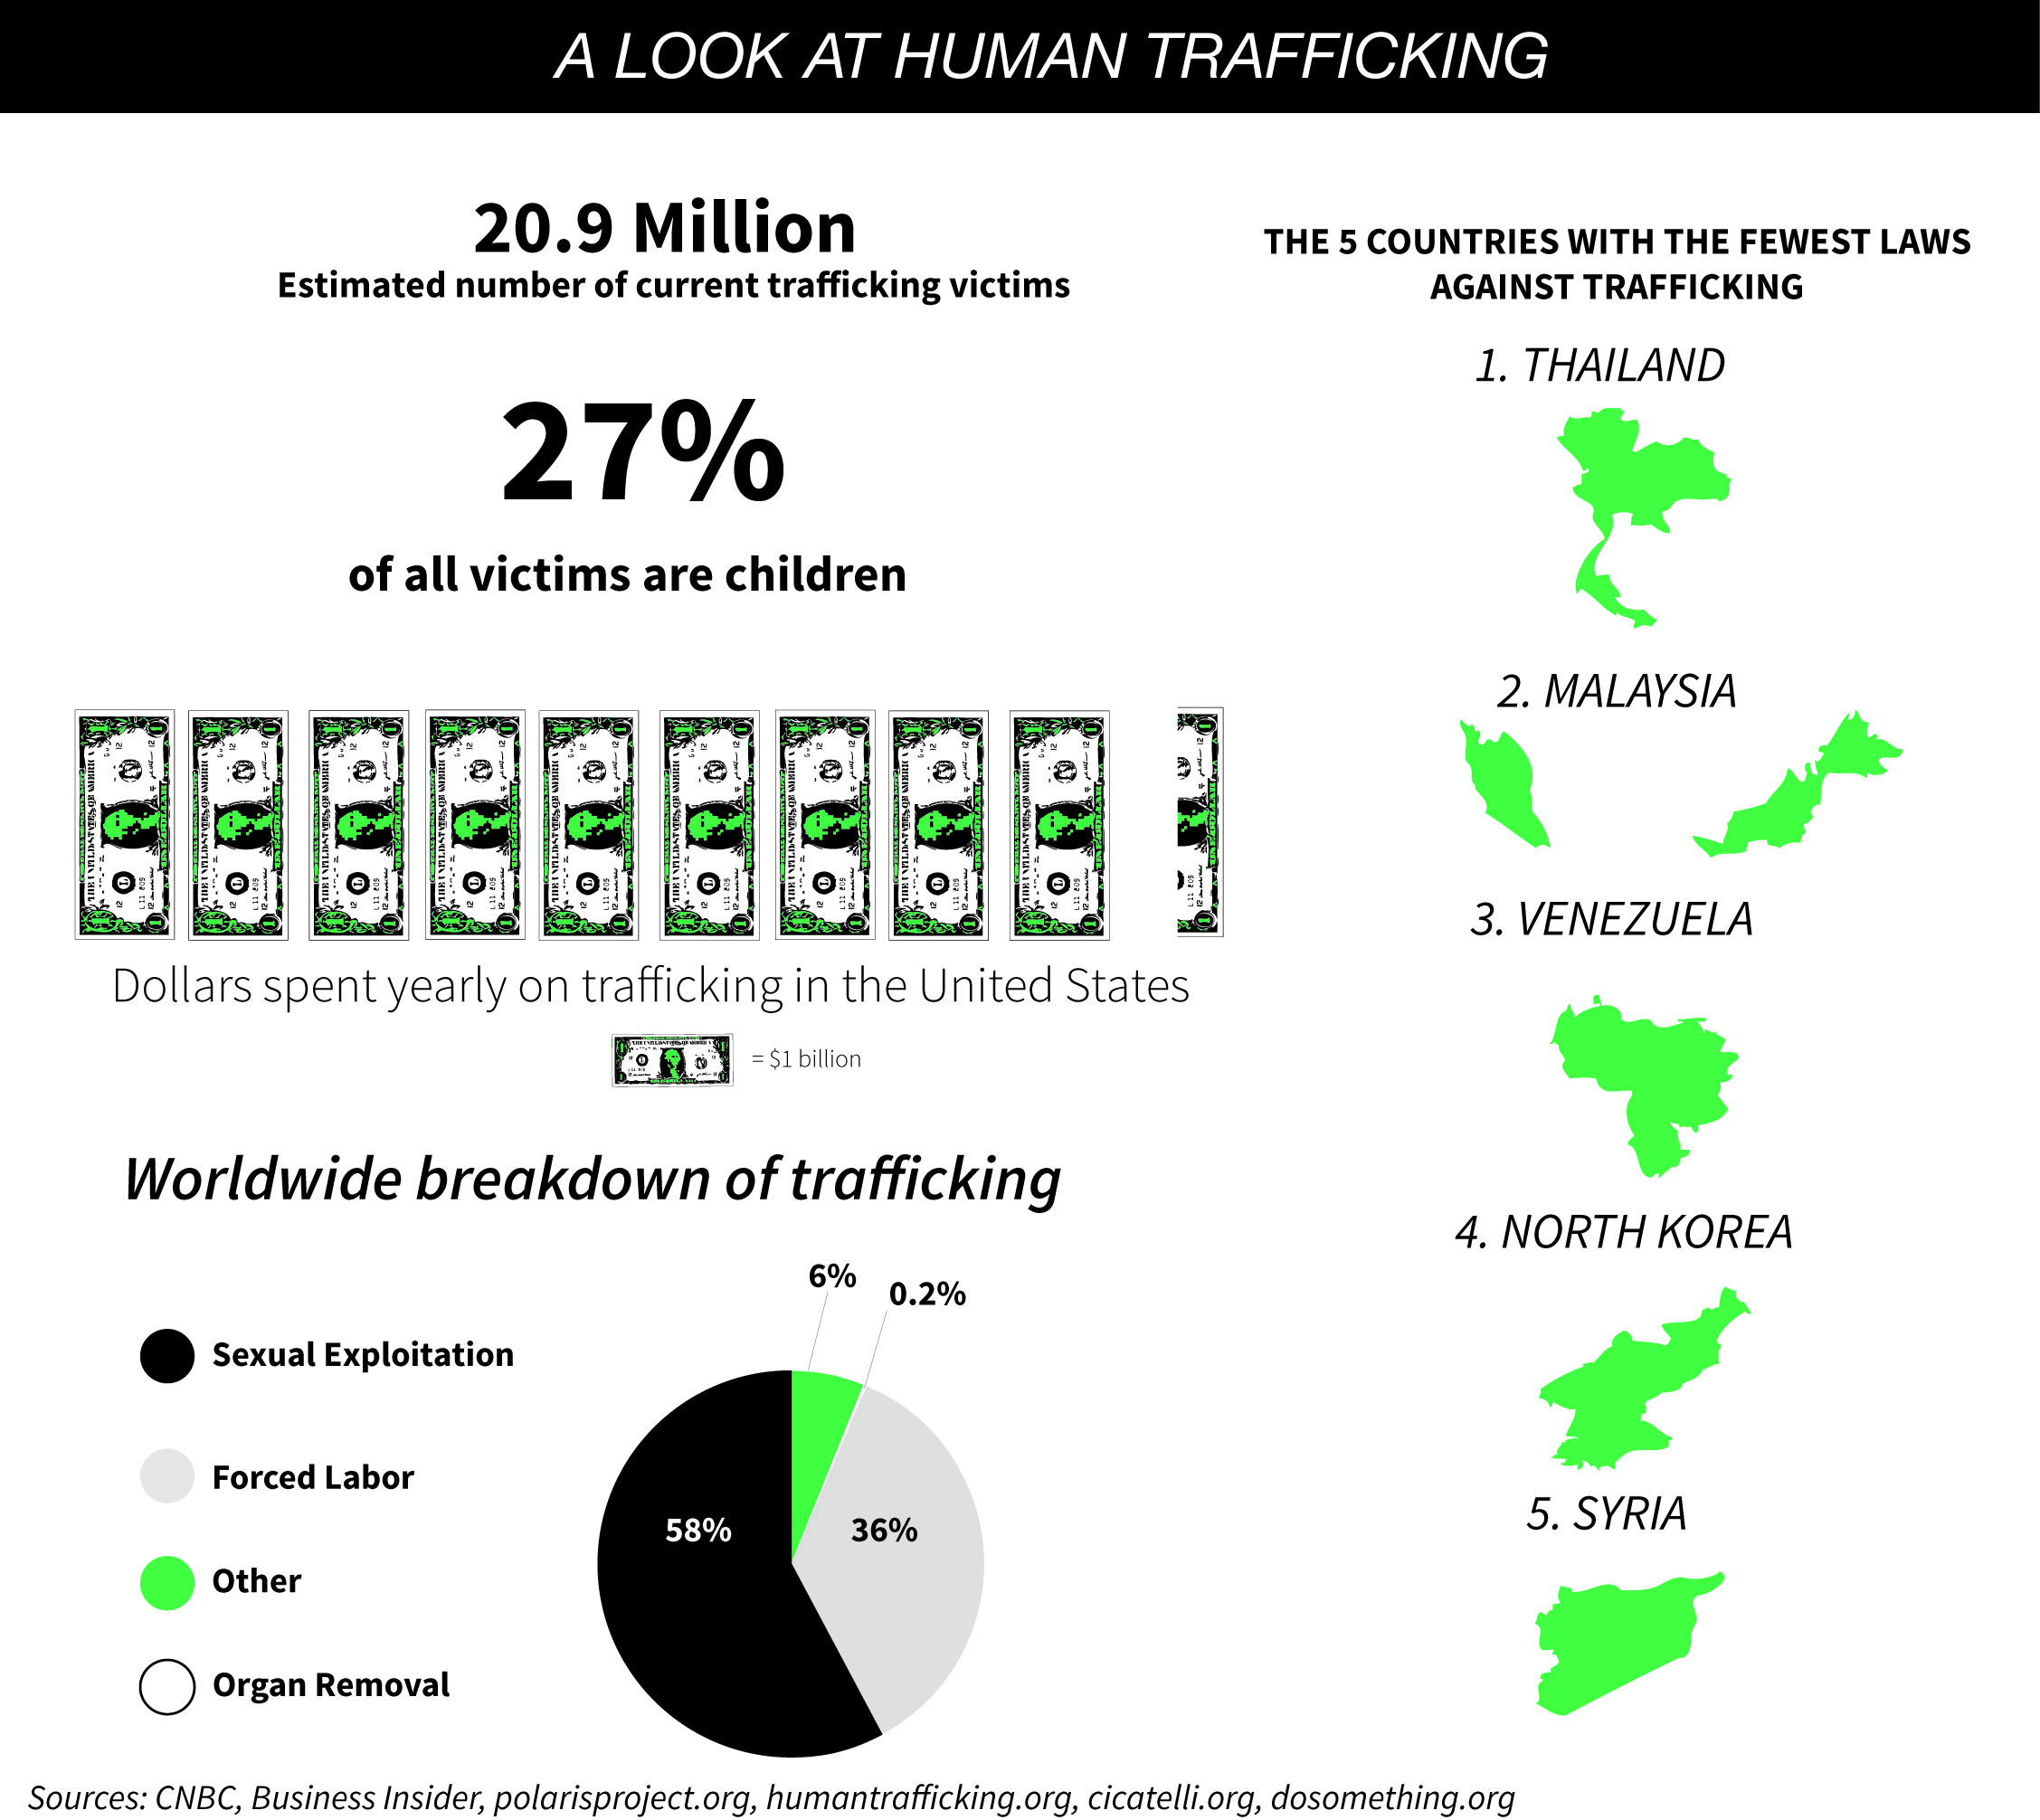 Human Trafficking: A Look